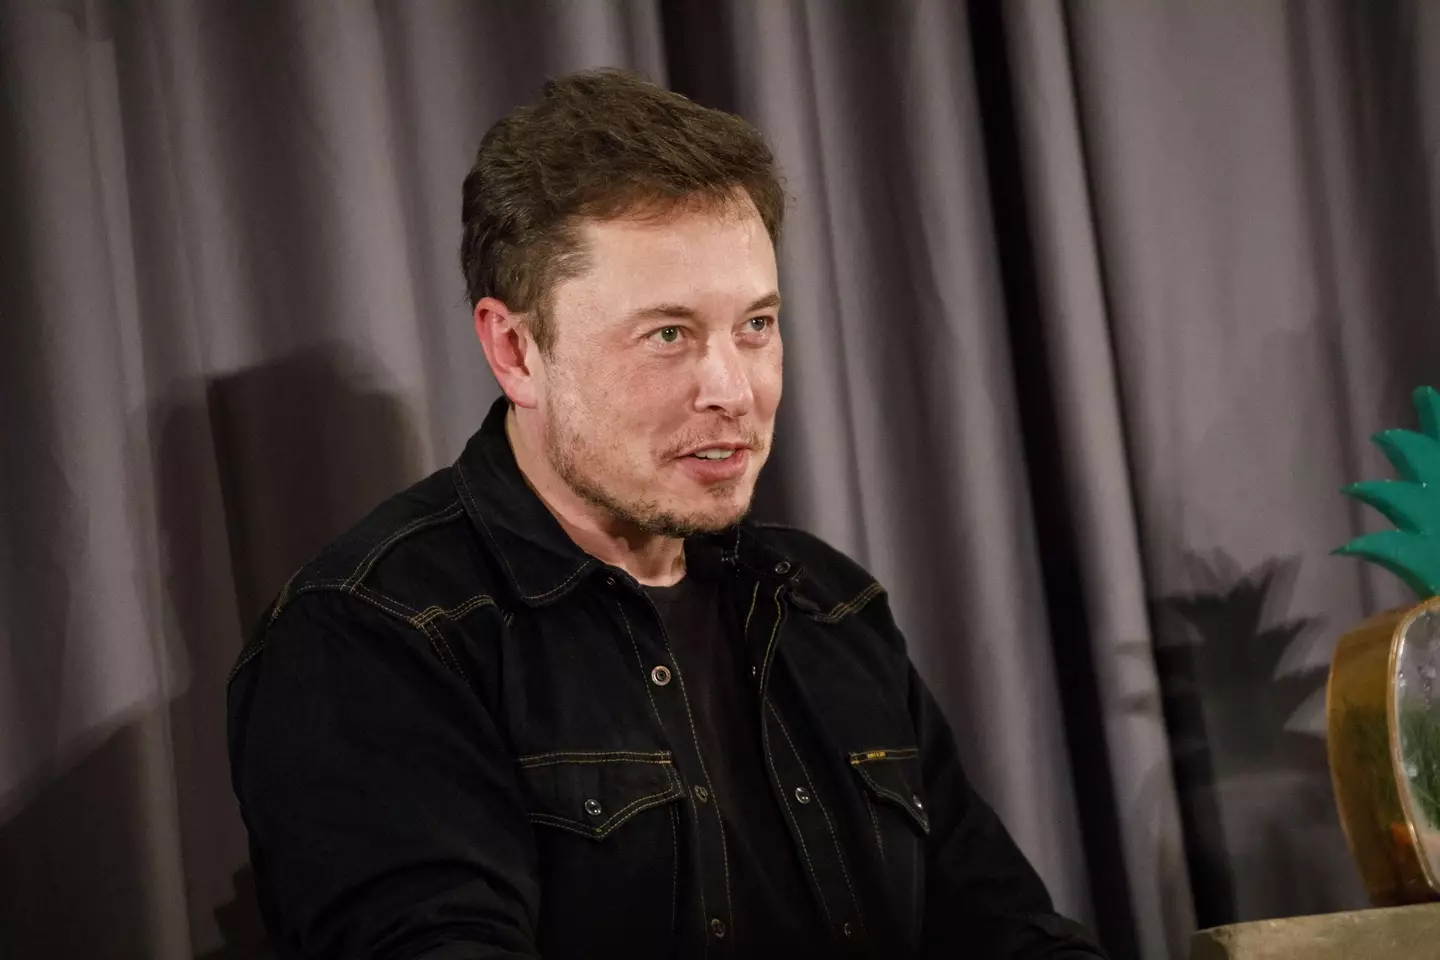 Elon Musk now has a net worth of $264.6 billion.